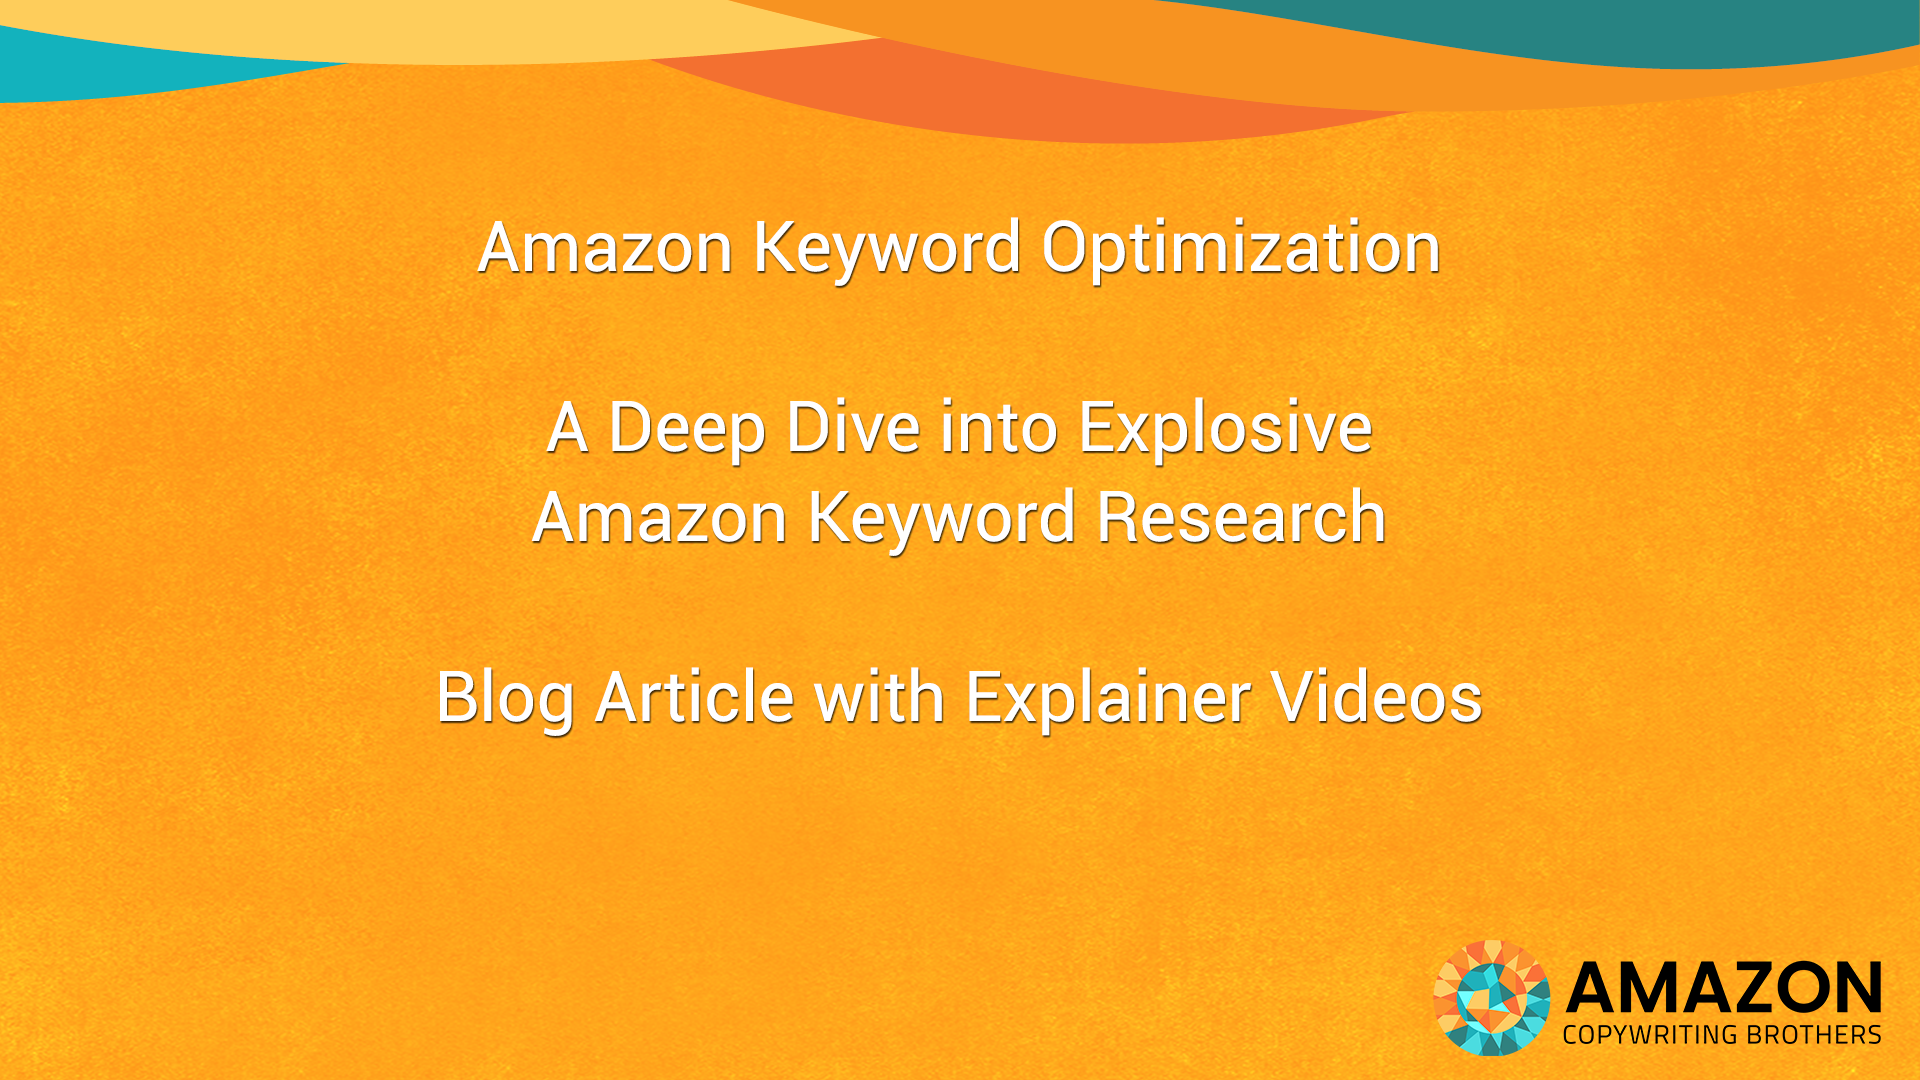 Amazon Keyword Optimization Blog Article by the Amazon Copywriting Brothers